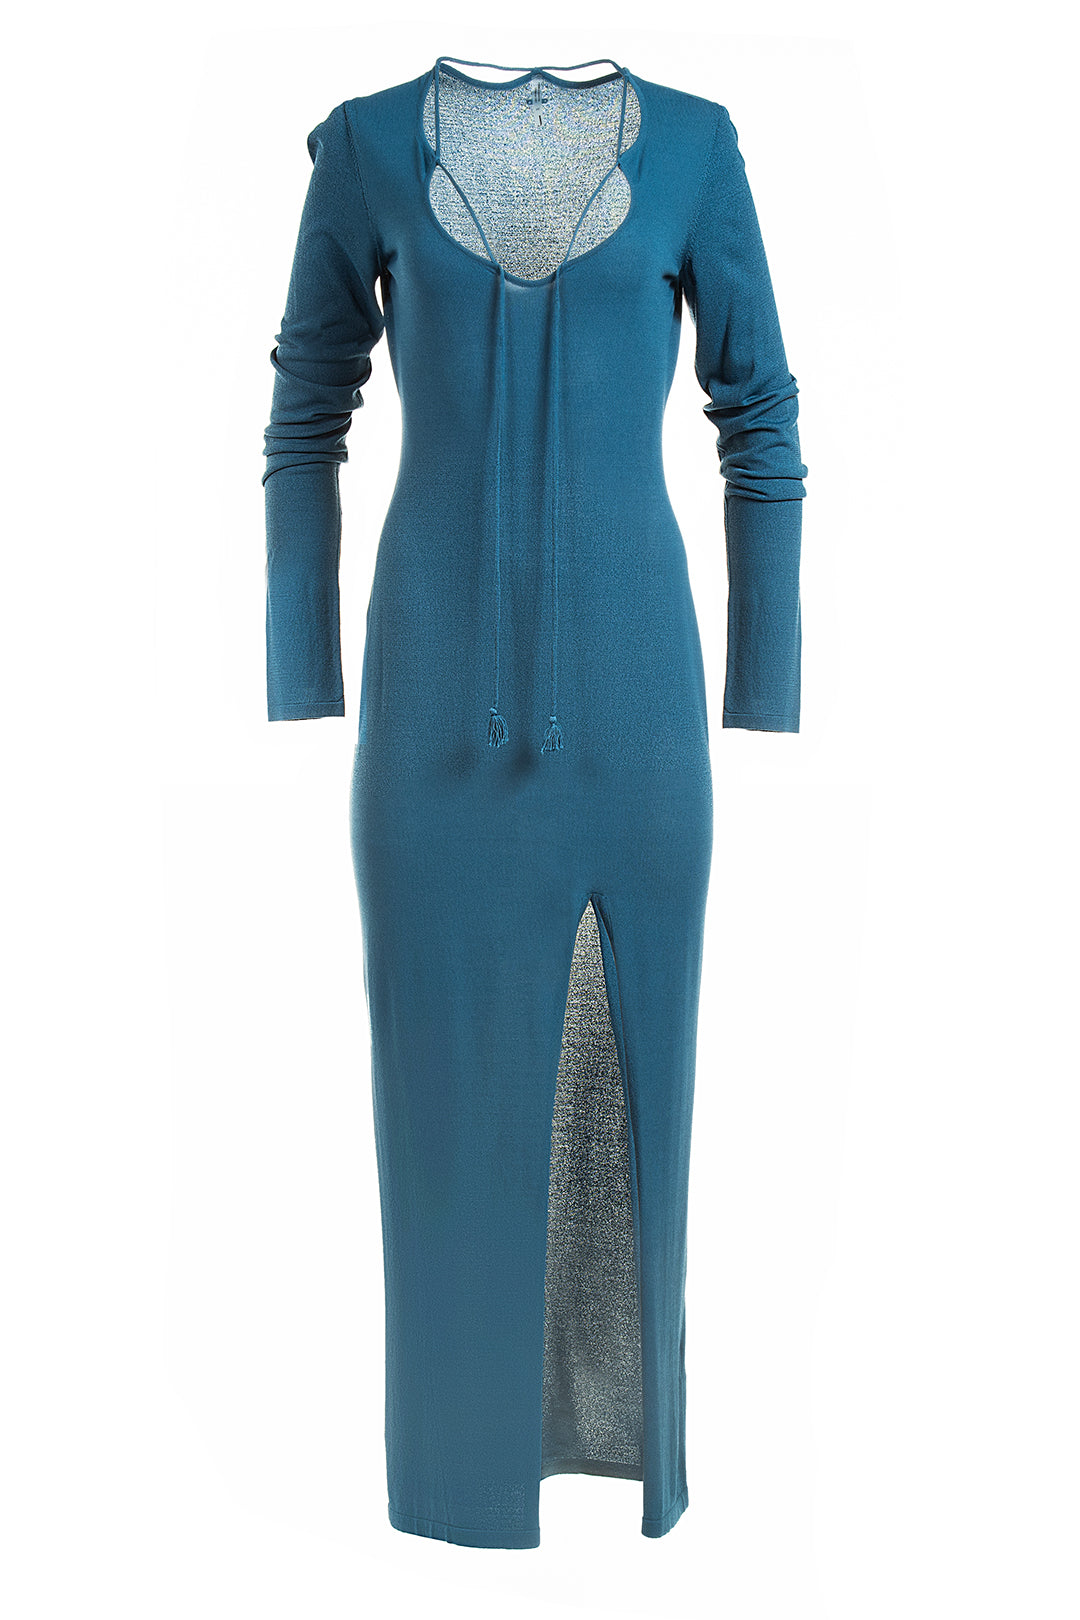 Robe bleu lagon décolletée à cordonnets | Millay